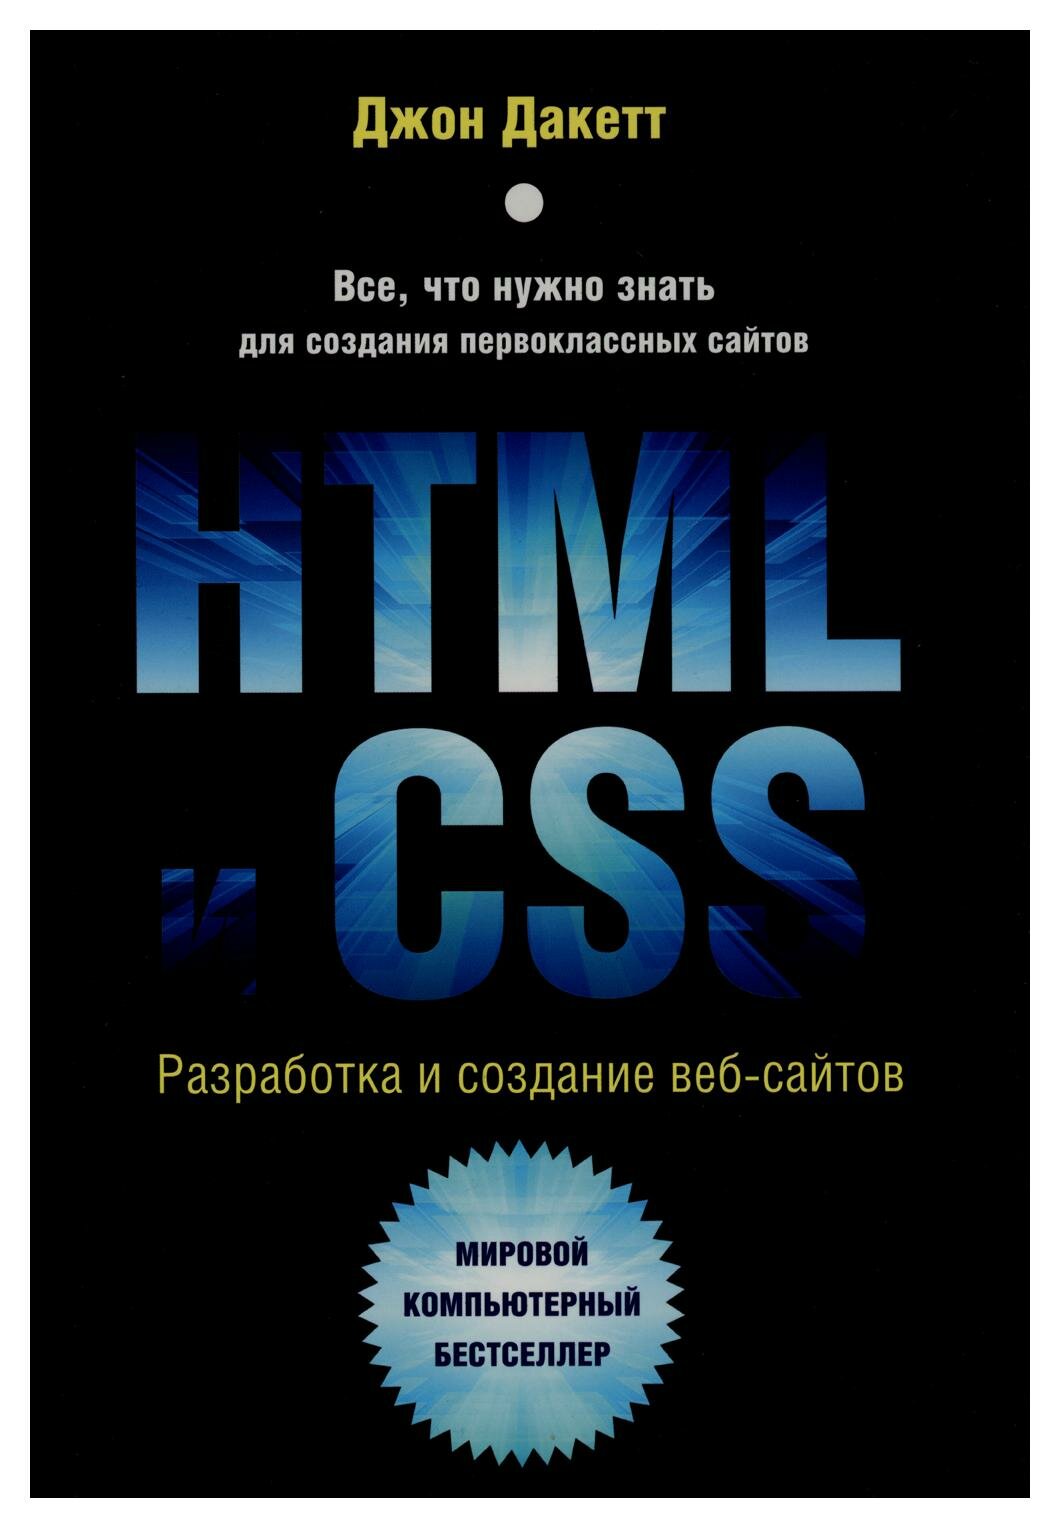 HTML и CSS. Разработка и дизайн веб-сайтов. Дакетт Дж. ЭКСМО